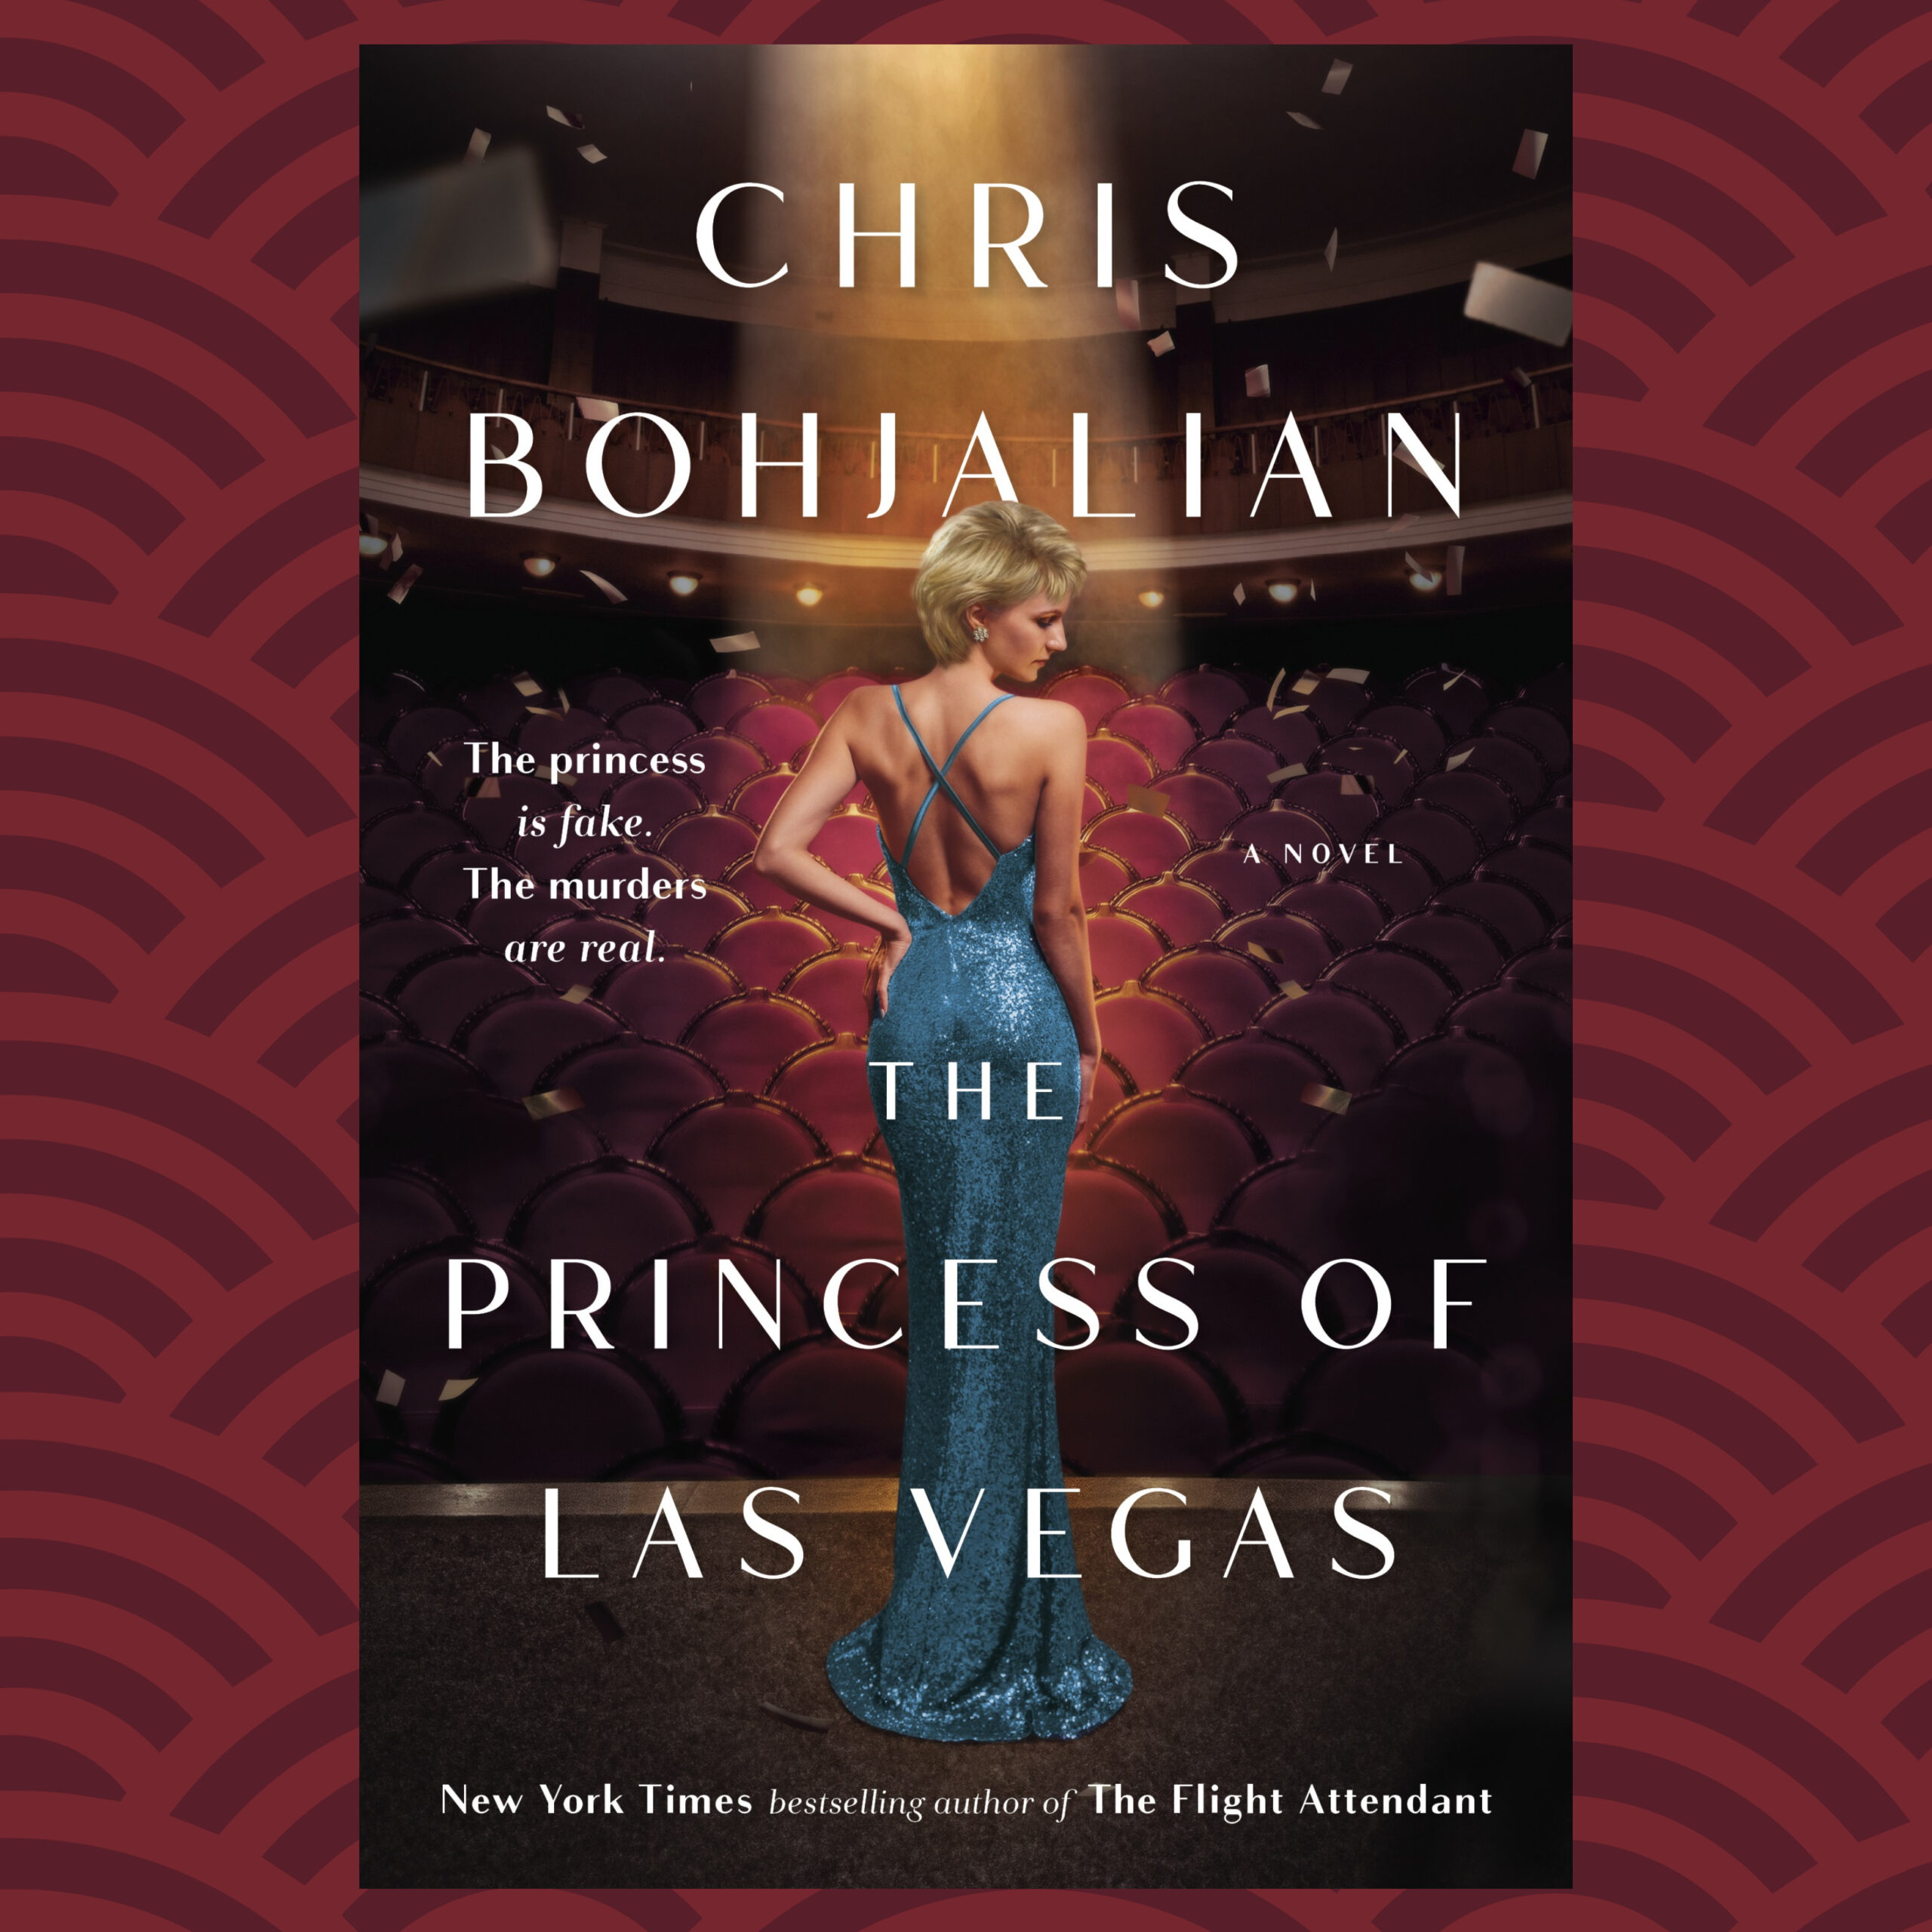 The Book Show | Chris Bohjalian - The Princess of Las Vegas